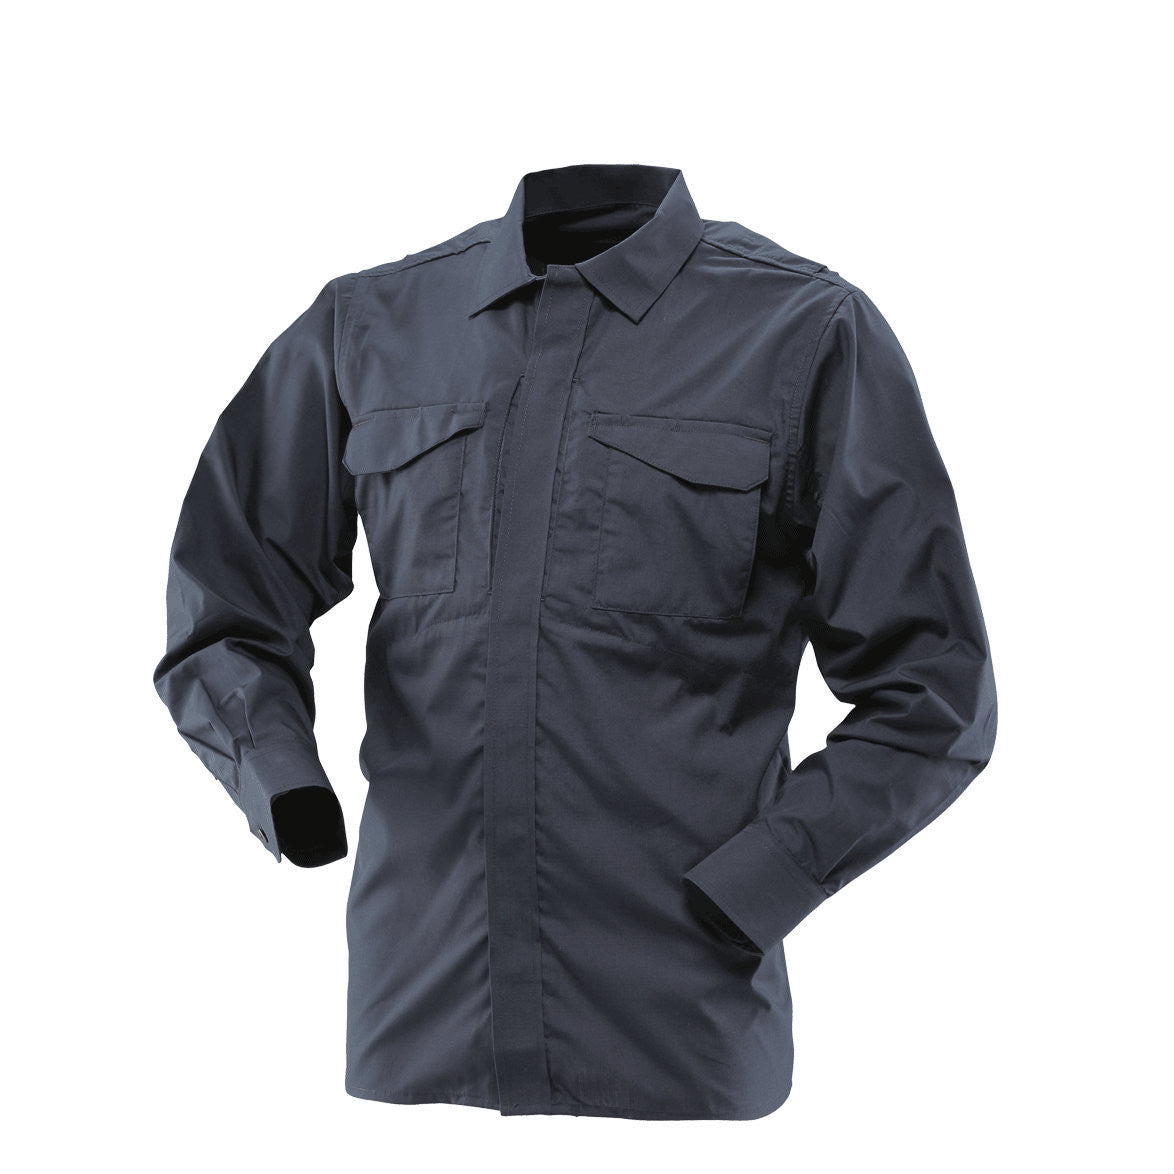 Tru-Spec 24/7 Series Ultralight Uniform Shirt Navy - Indy Army Navy